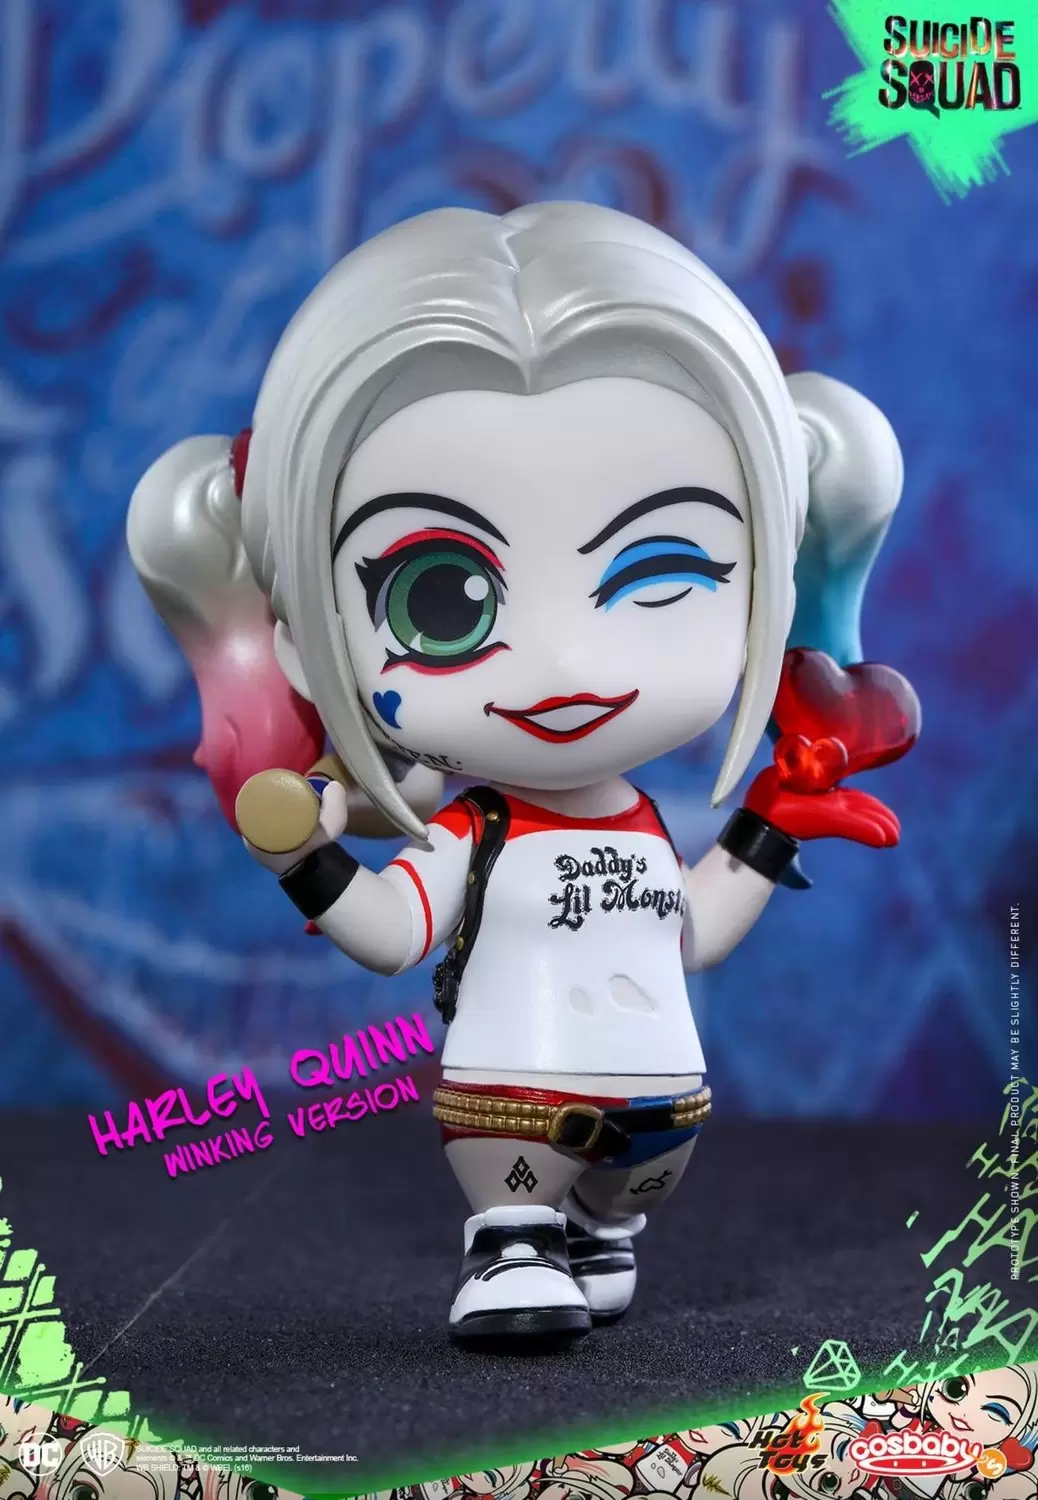 Cosbaby Figures - Harley Quinn Winking Version